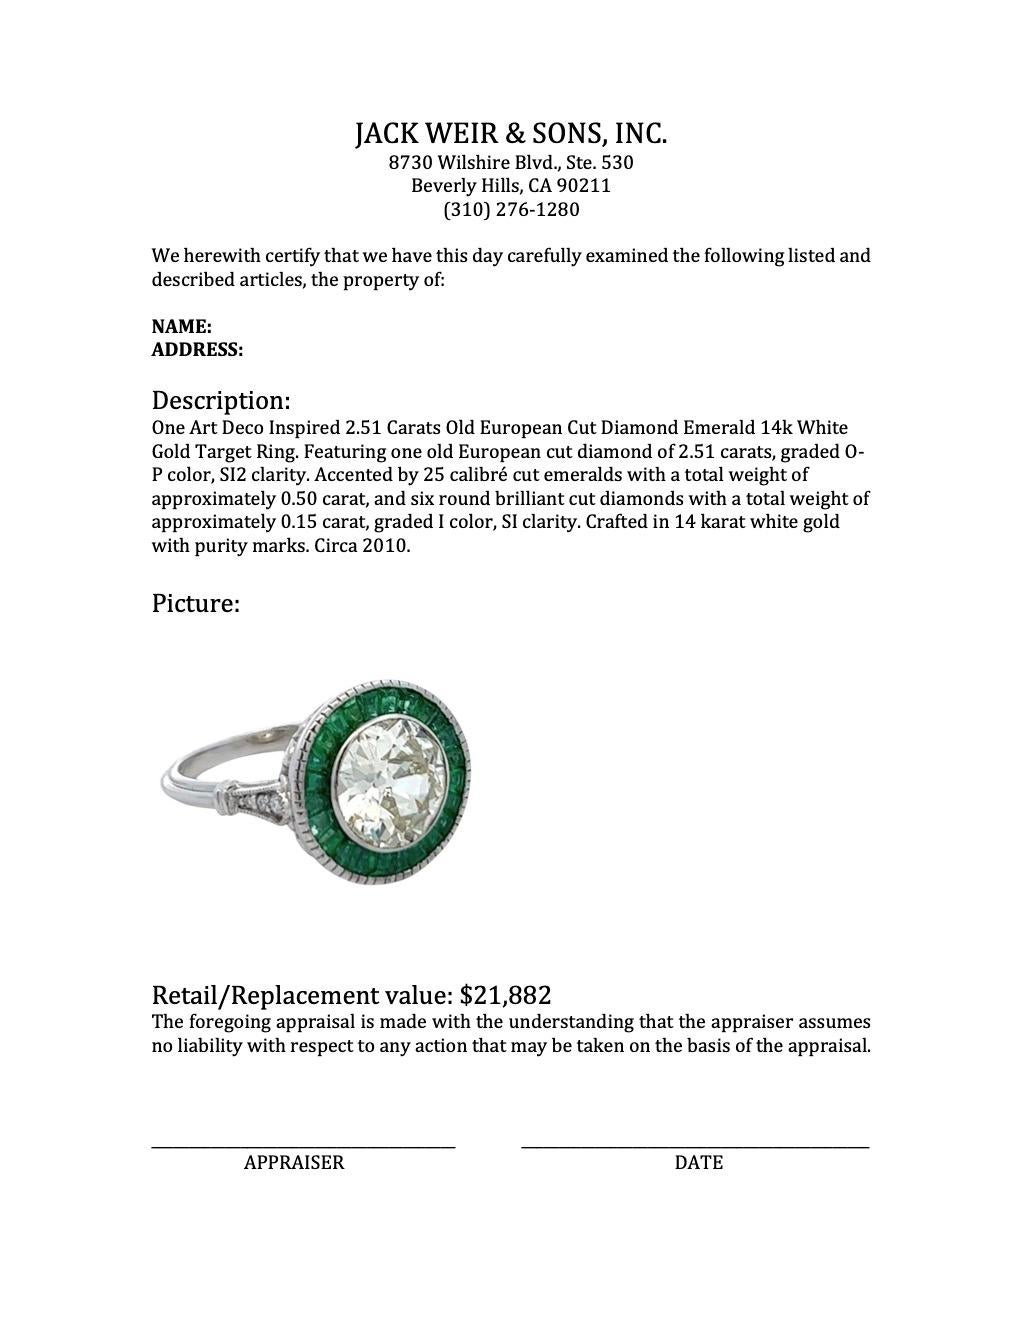 Art Deco Inspired 2.51 Carats Old European Cut Diamond Emerald 14k White Gold 3